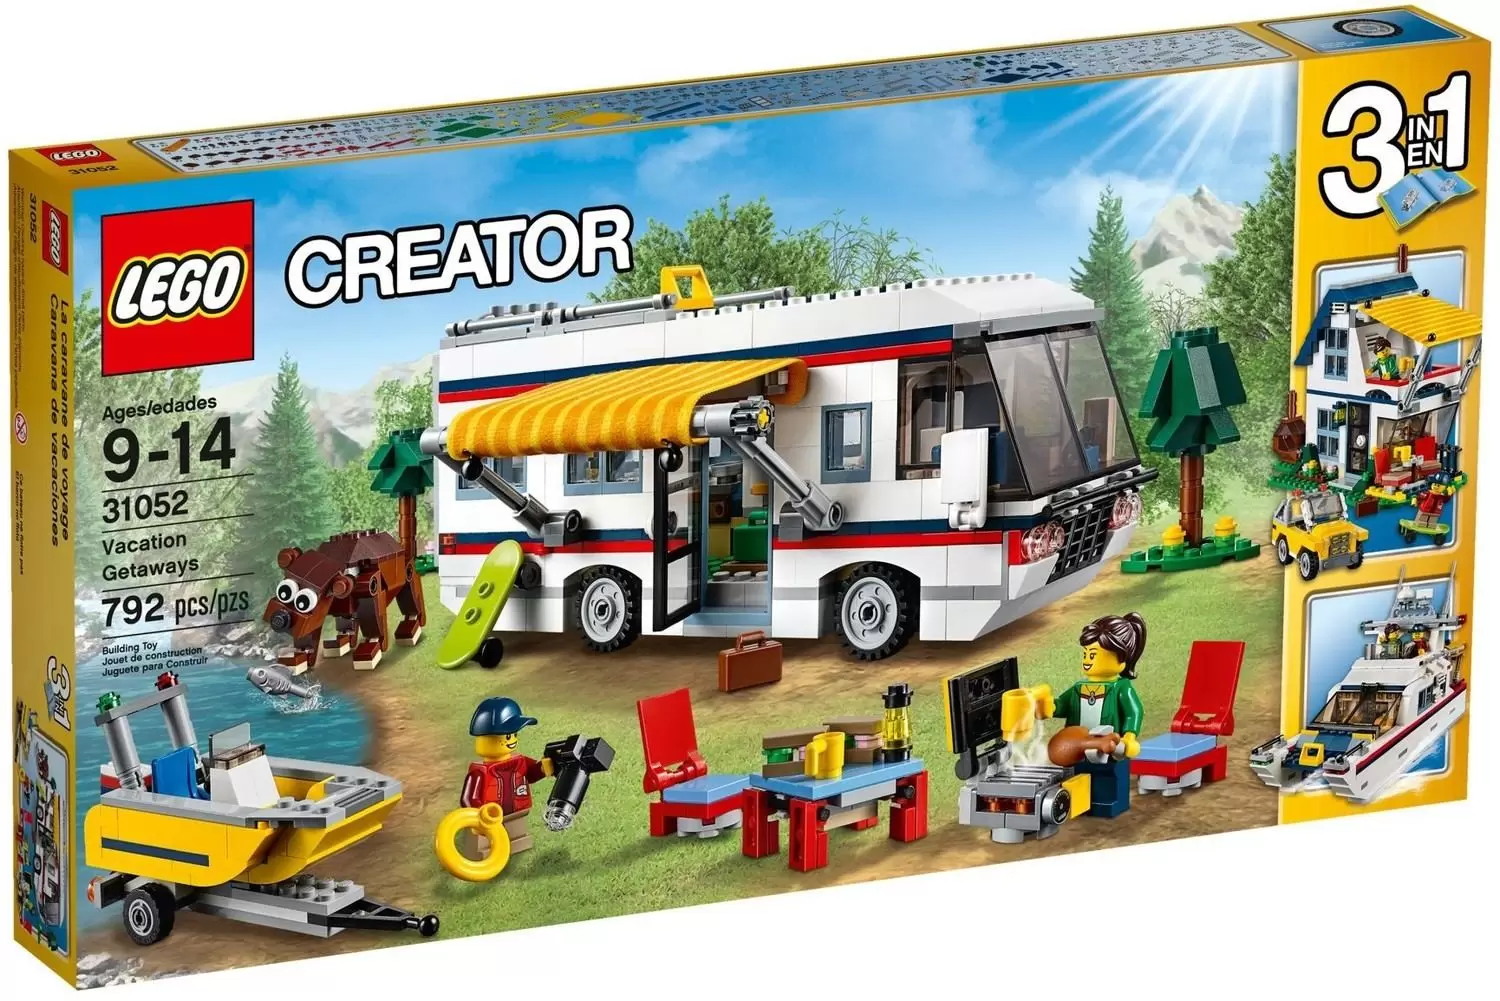 LEGO Creator - Vacation Getaways